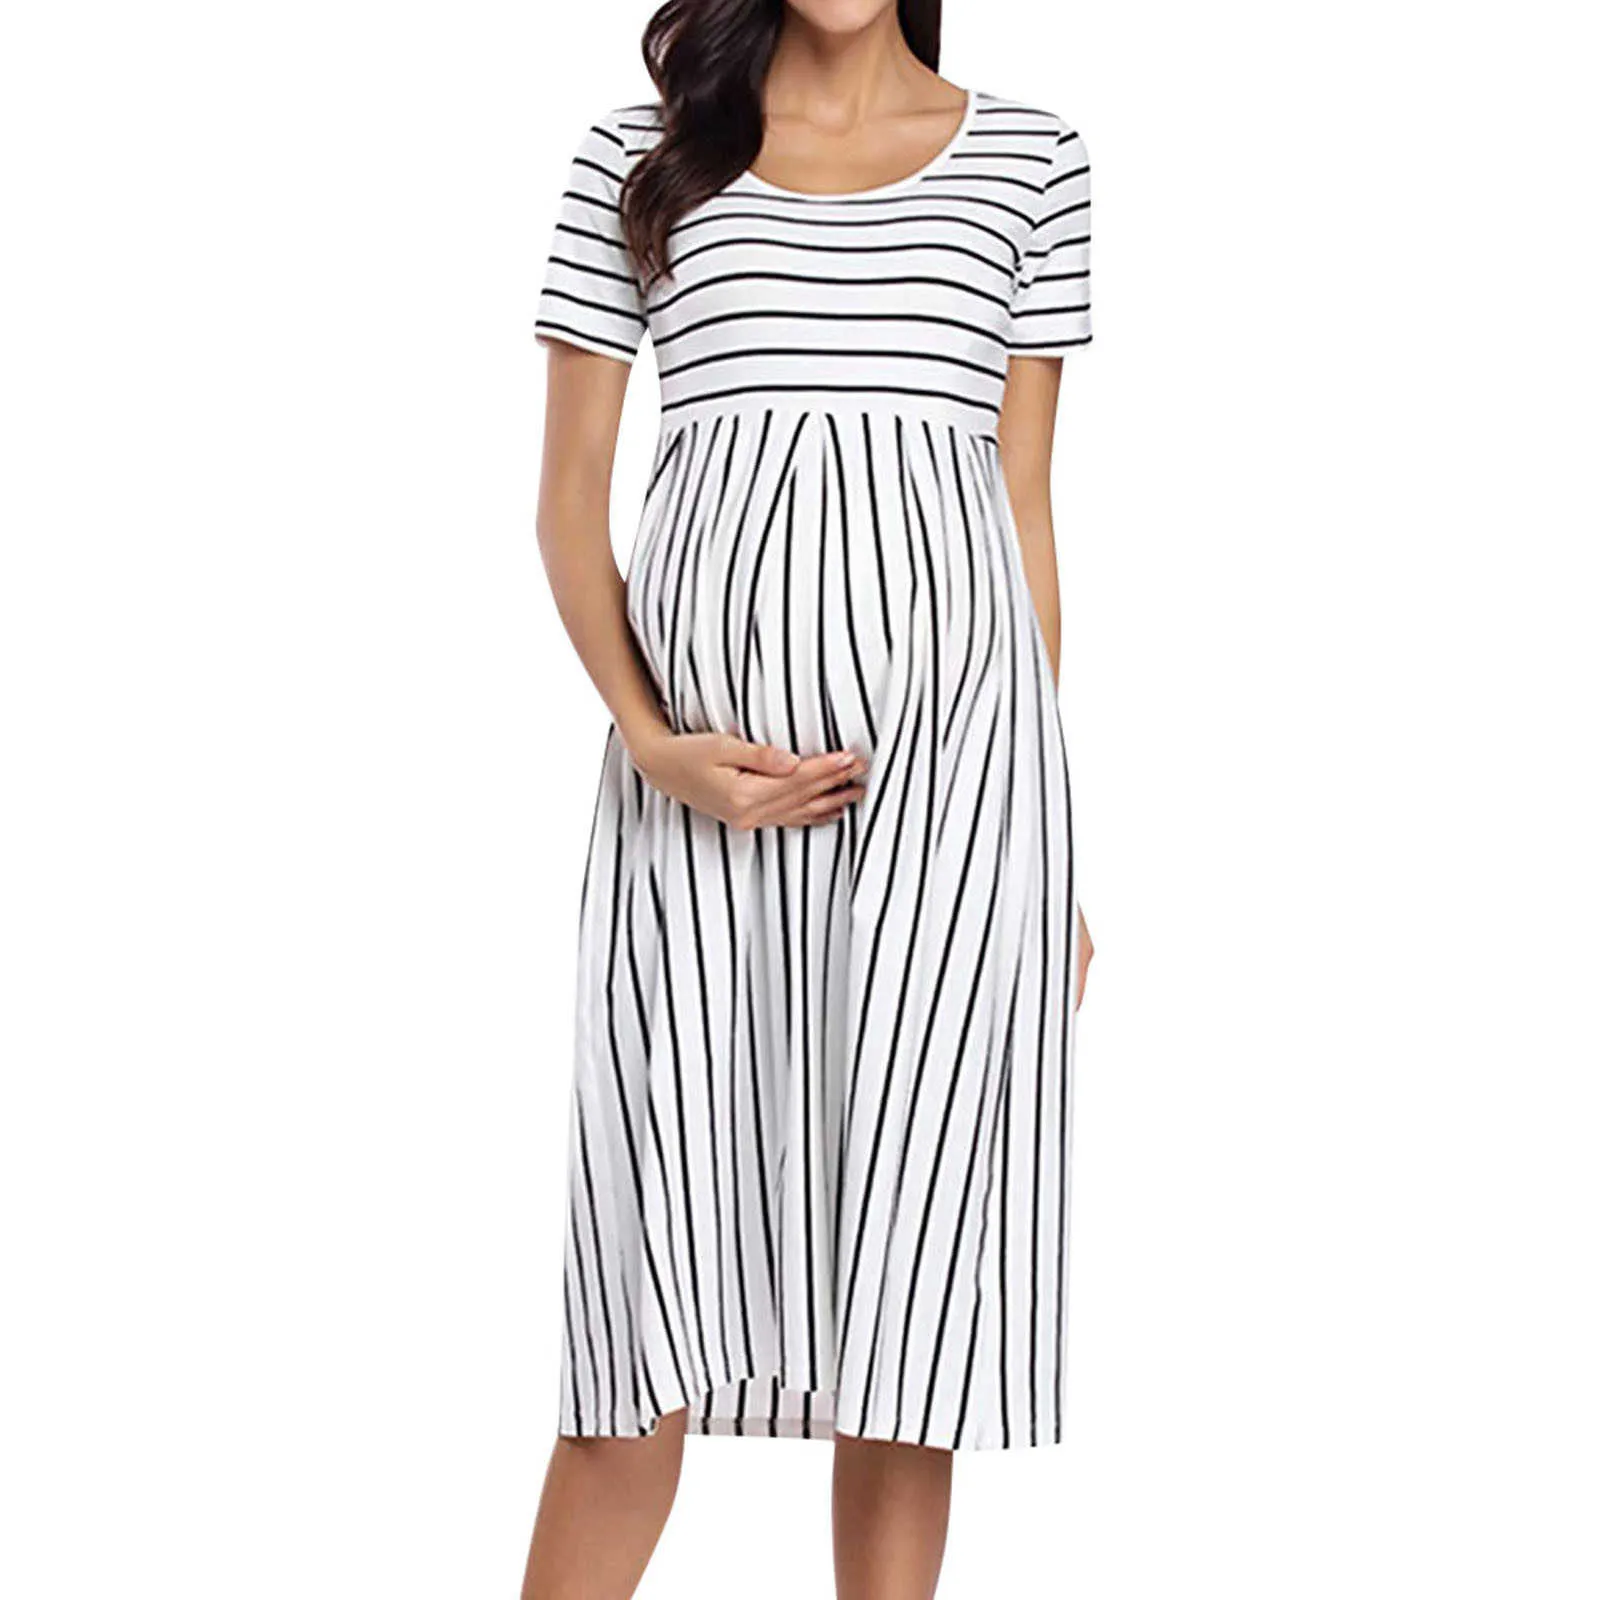 Causal Woman Maternity Nursing Dress O-neck Stripe Short Sleeve Breast-feeding Pregnant Maternity Clothes Zwangerschaps Kleding Y0924